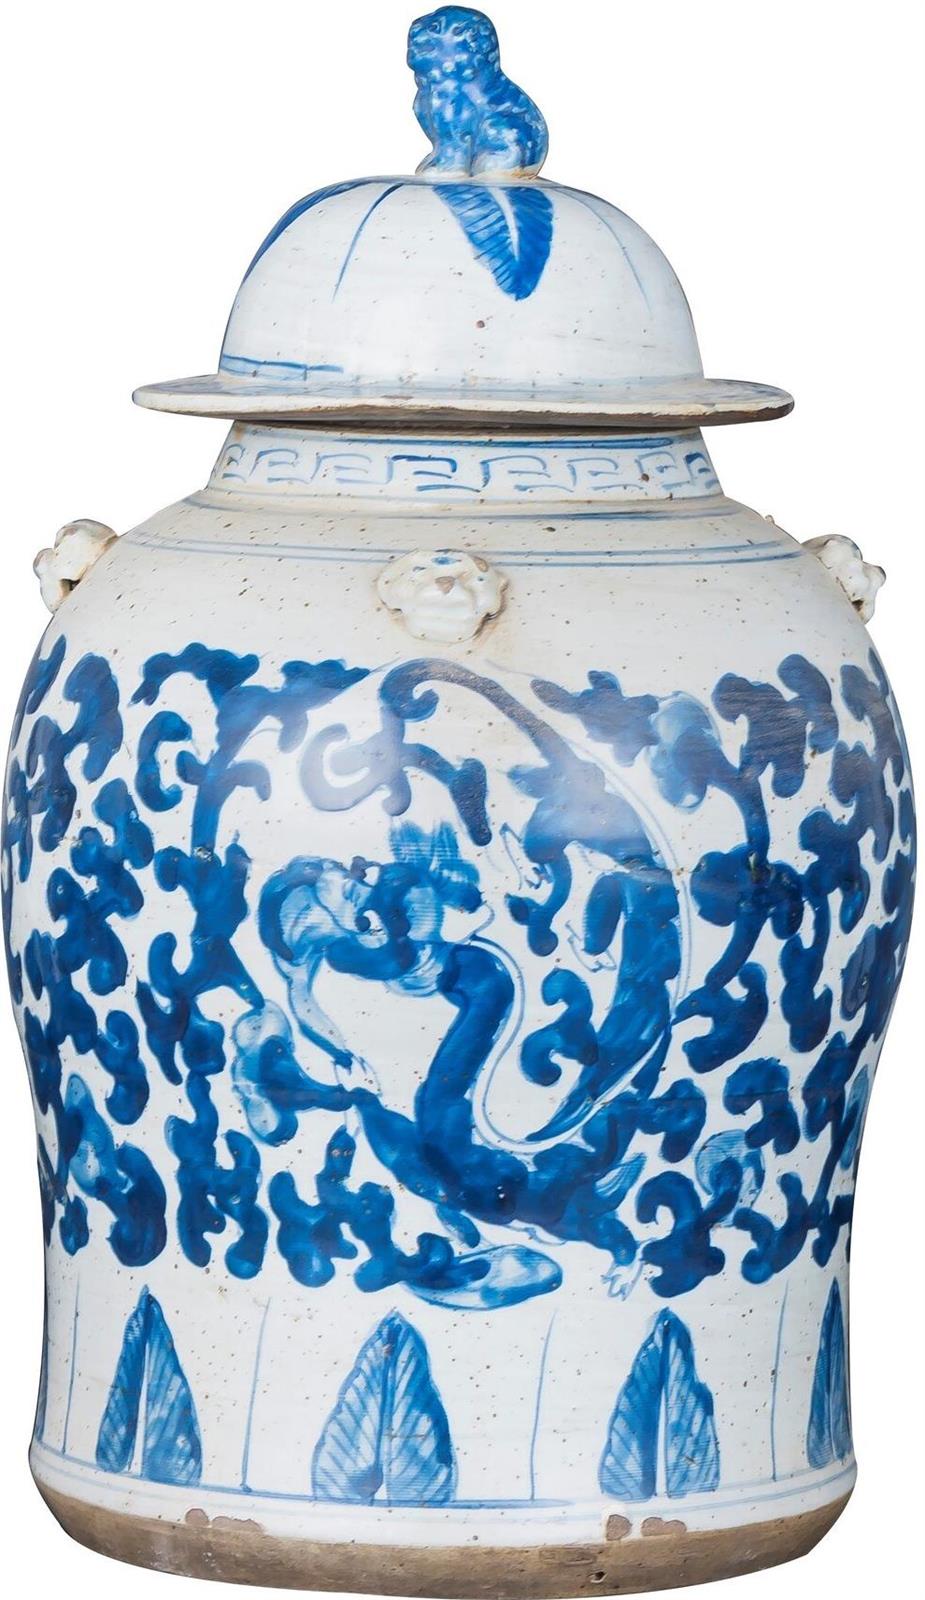 Temple Jar Vase Vintage Lotus Dragon Small Blue White Ceramic Hand-Crafted-Image 1